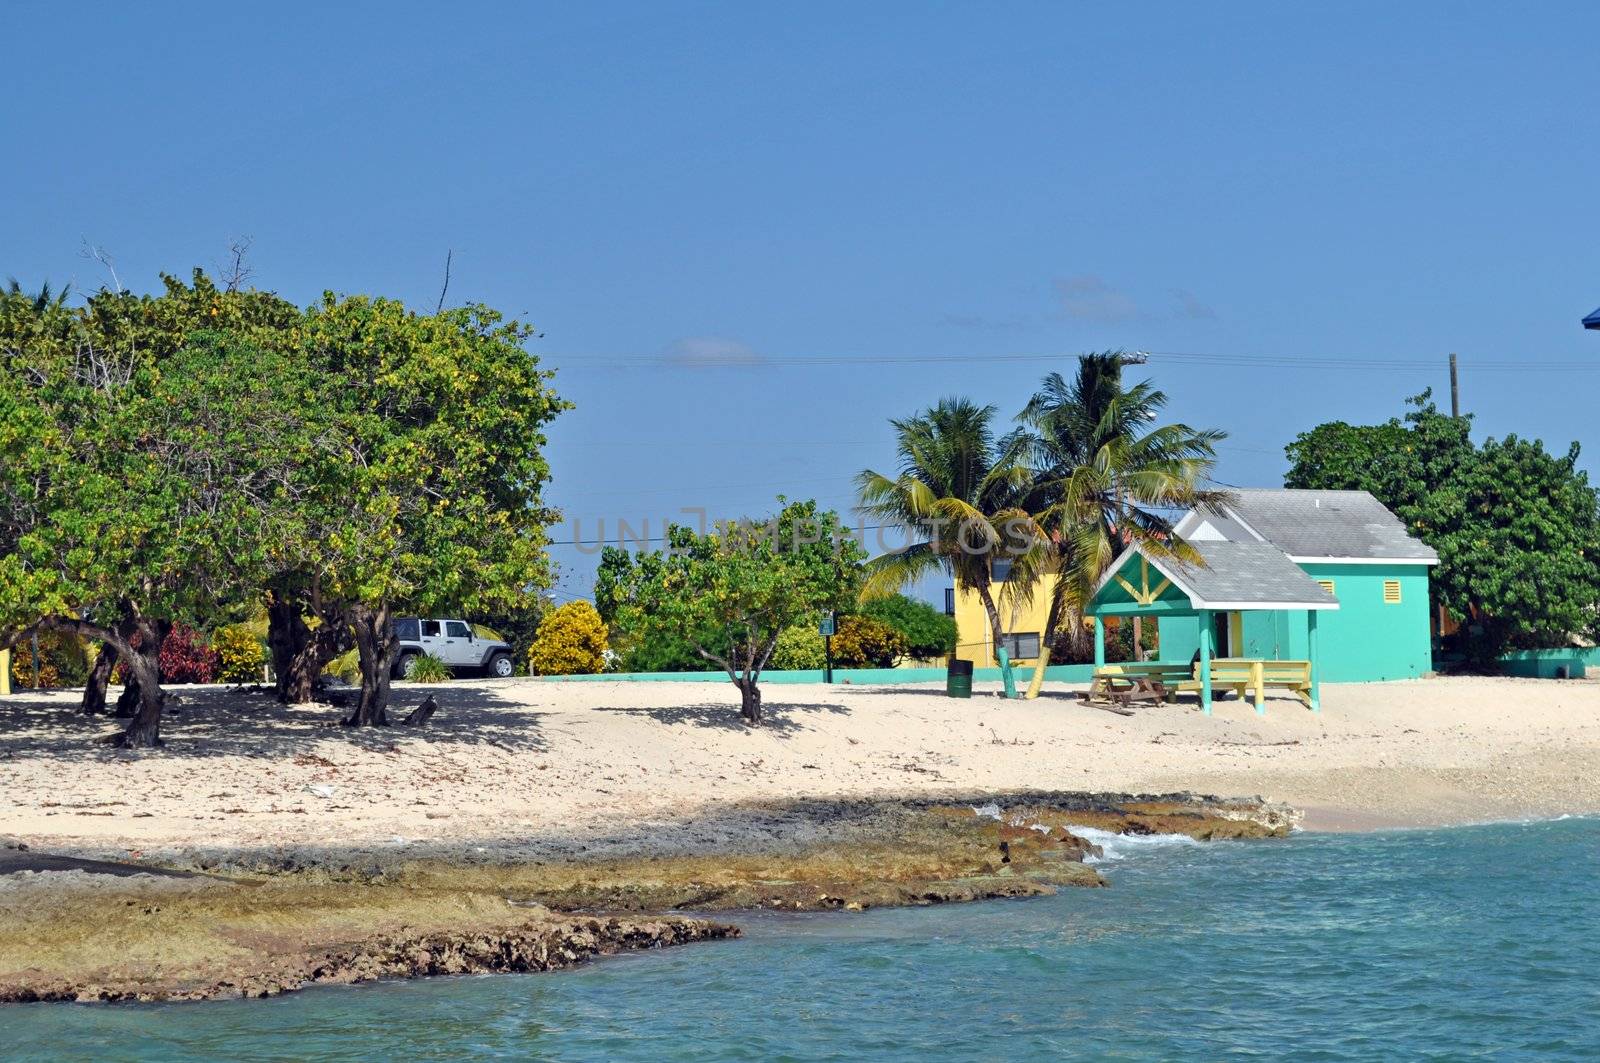 Beach Grand Cayman Cayman Islands by mosnell